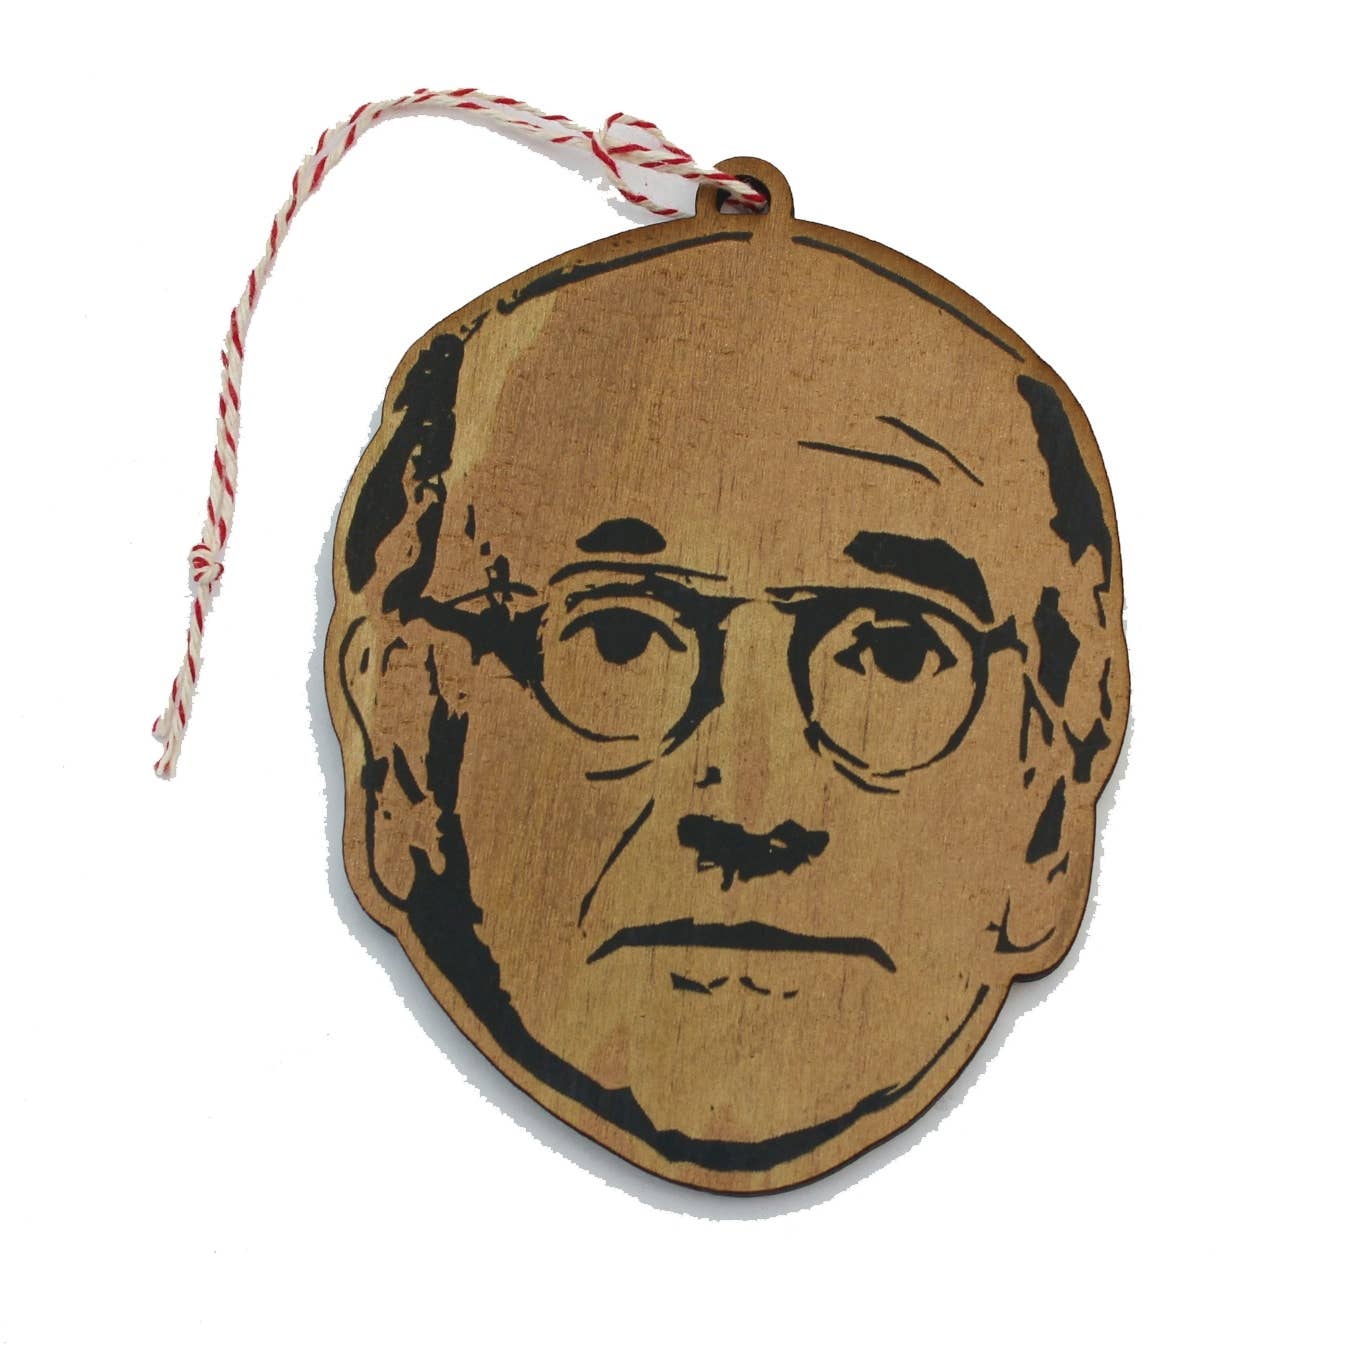 Larry David Ornament